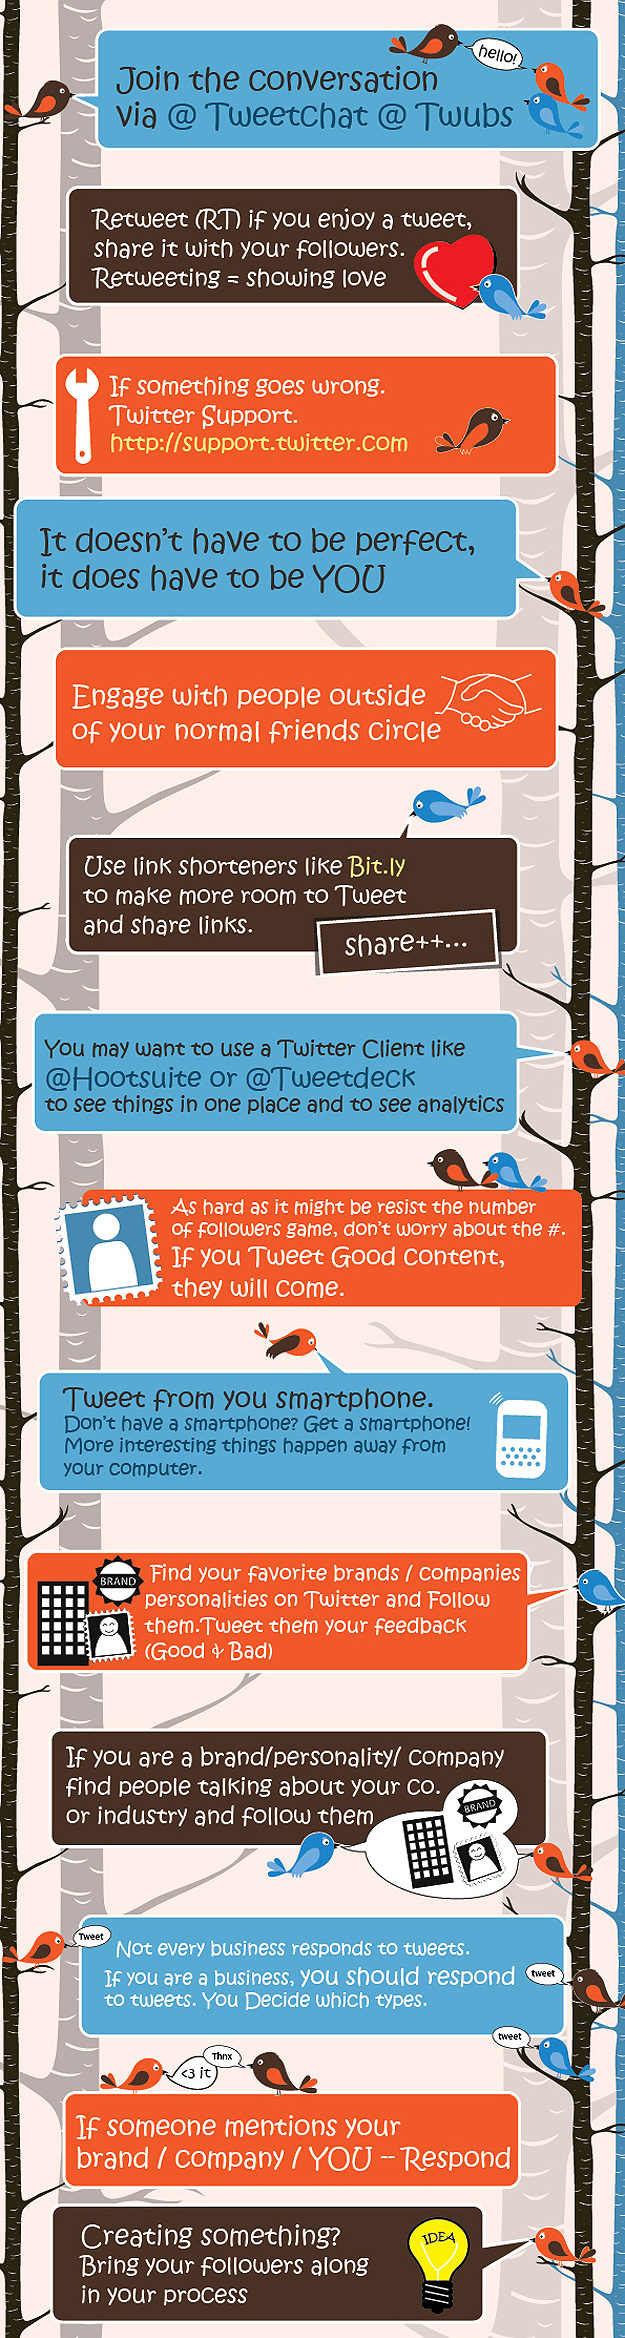 Twitter conversation tips infographic.jpg